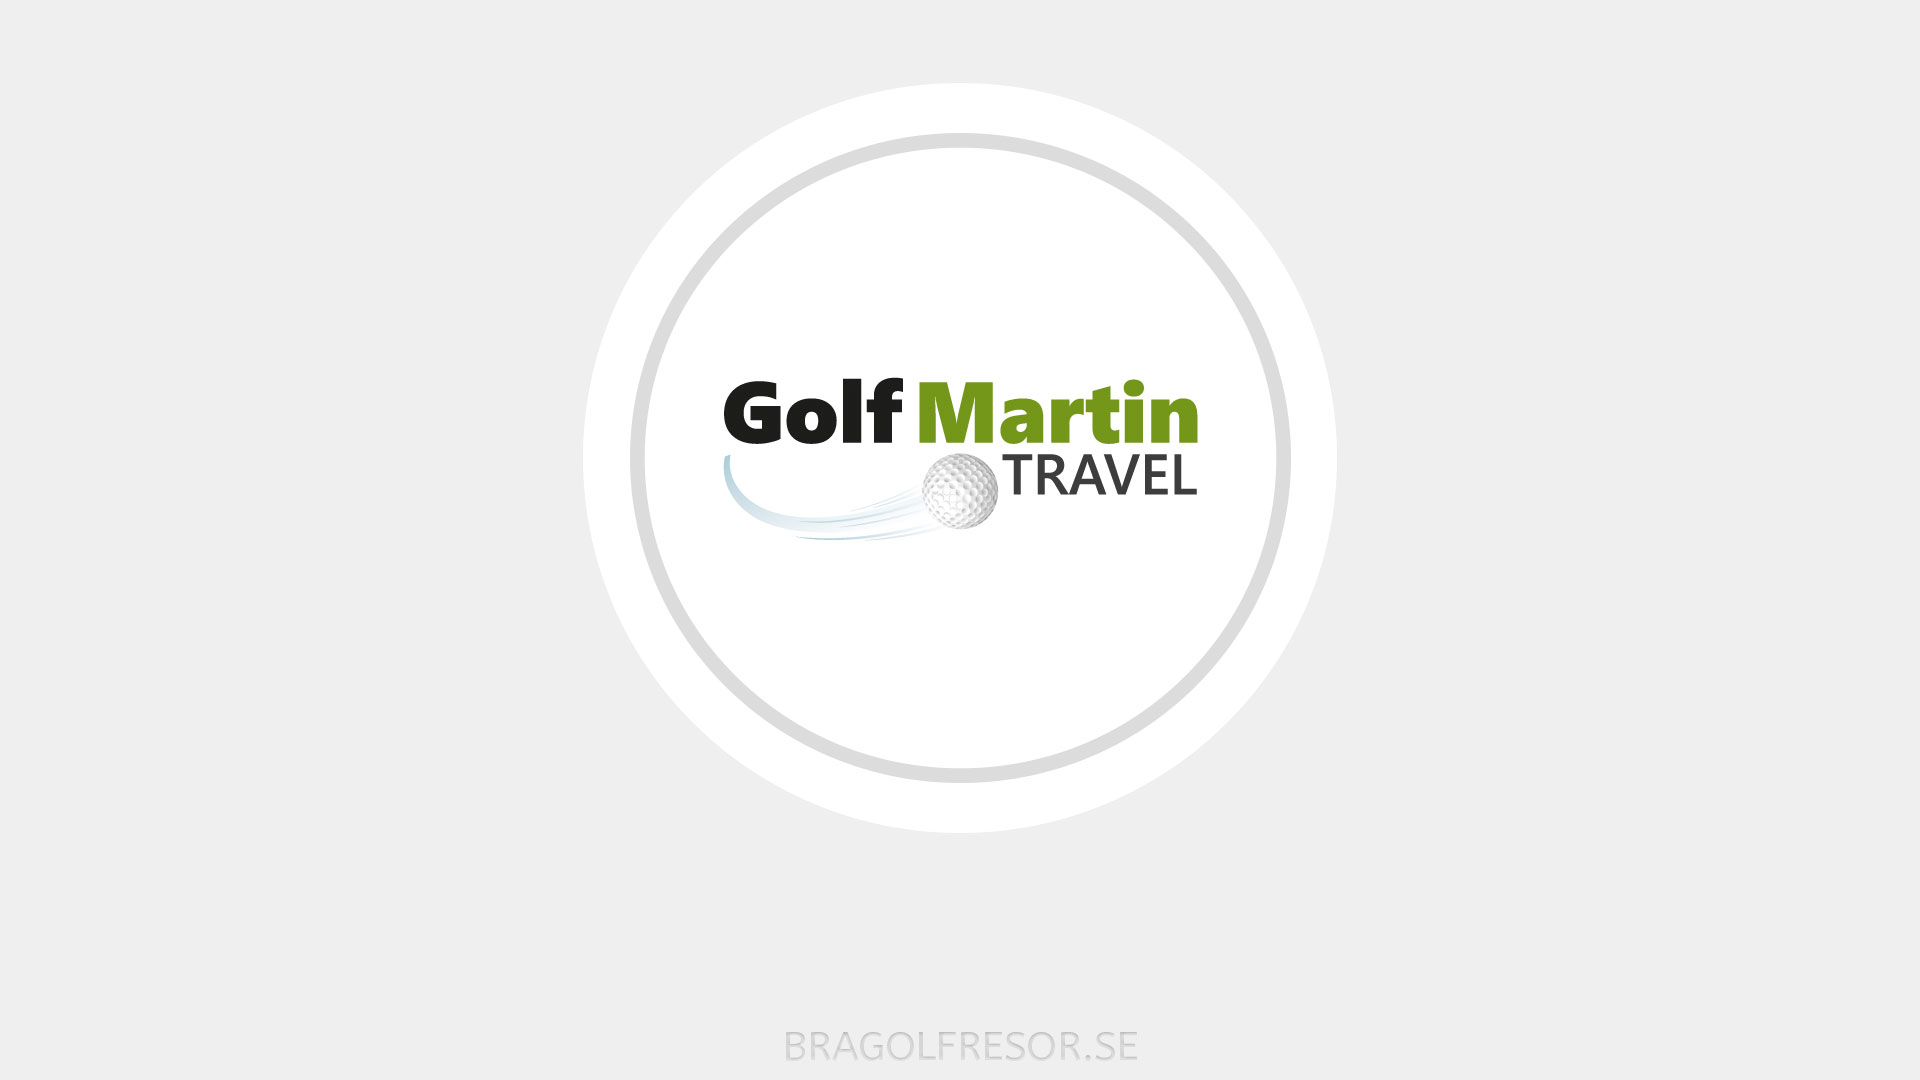 GolfMartin Travel